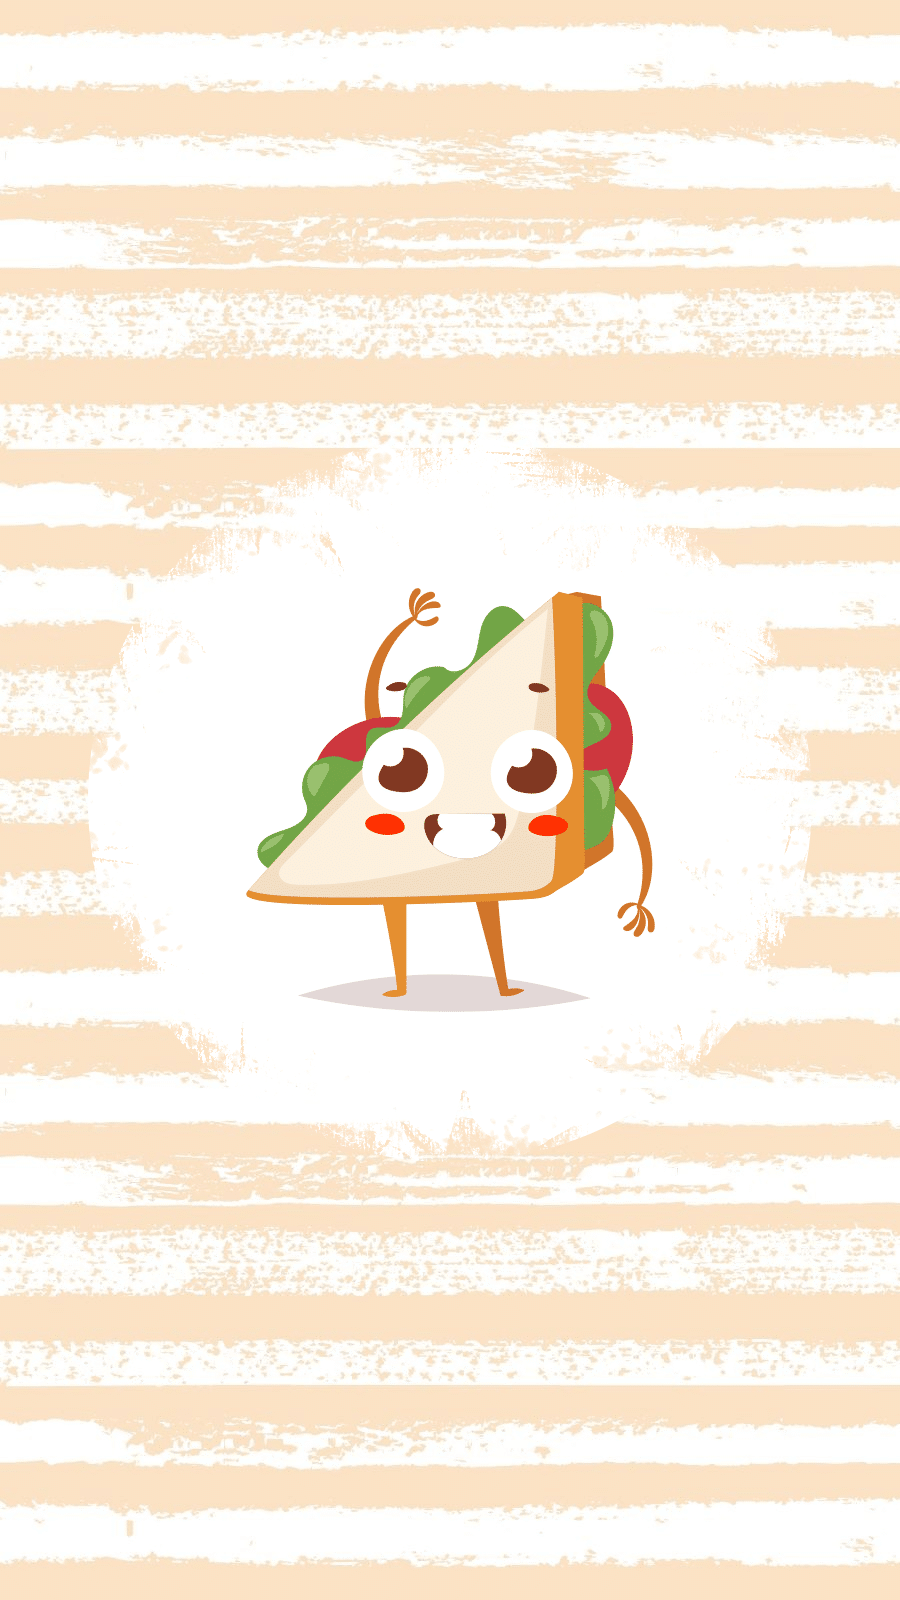 Stripe Backgorund Fast Food Smile Sandwich Cartoon Illustration Instagram Highlight预览效果